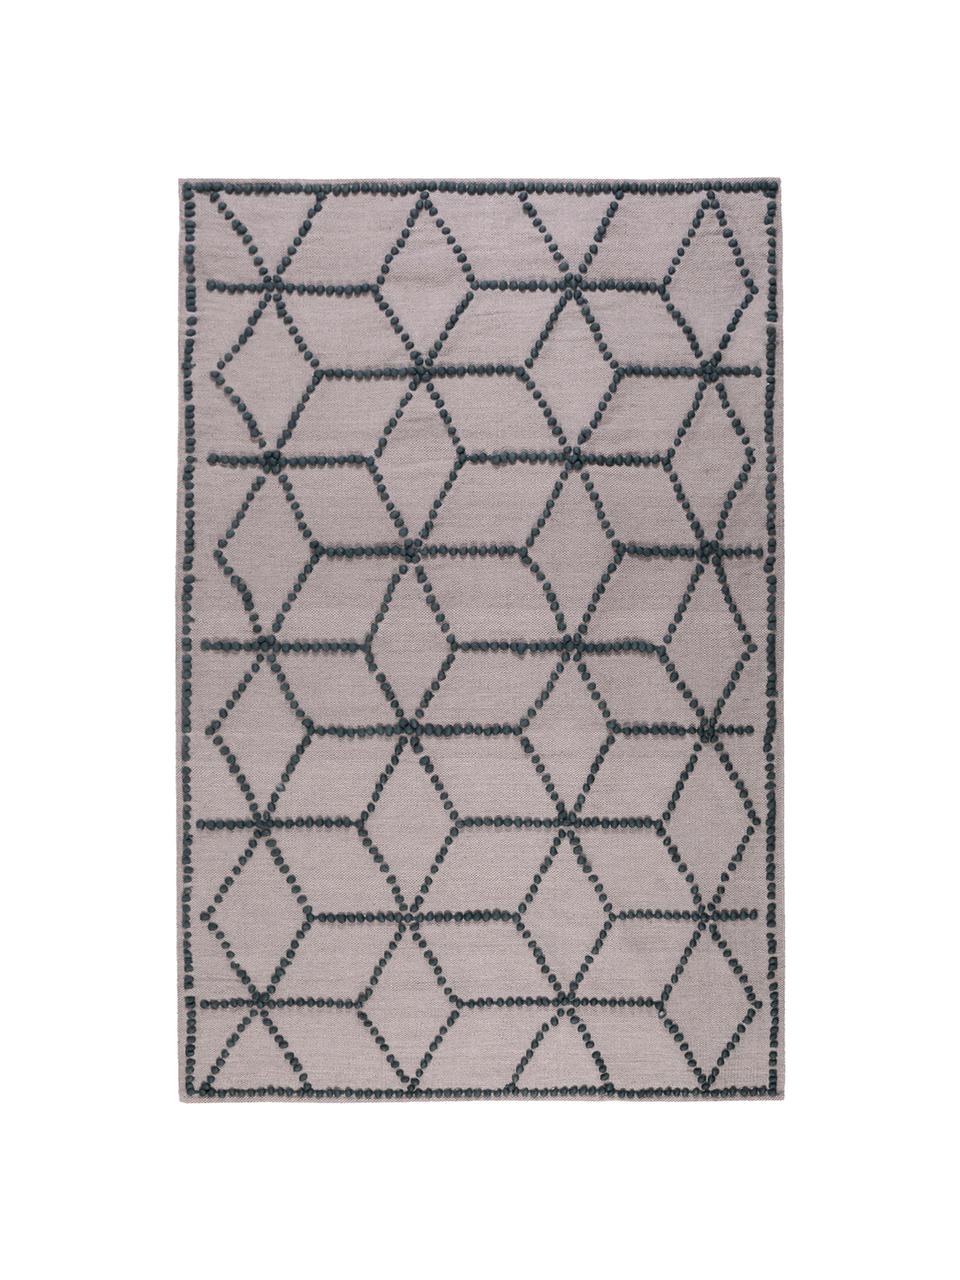 Tappeto in lana tessuto a mano Diamantes, Taupe, grigio, L 190 x P 130 cm